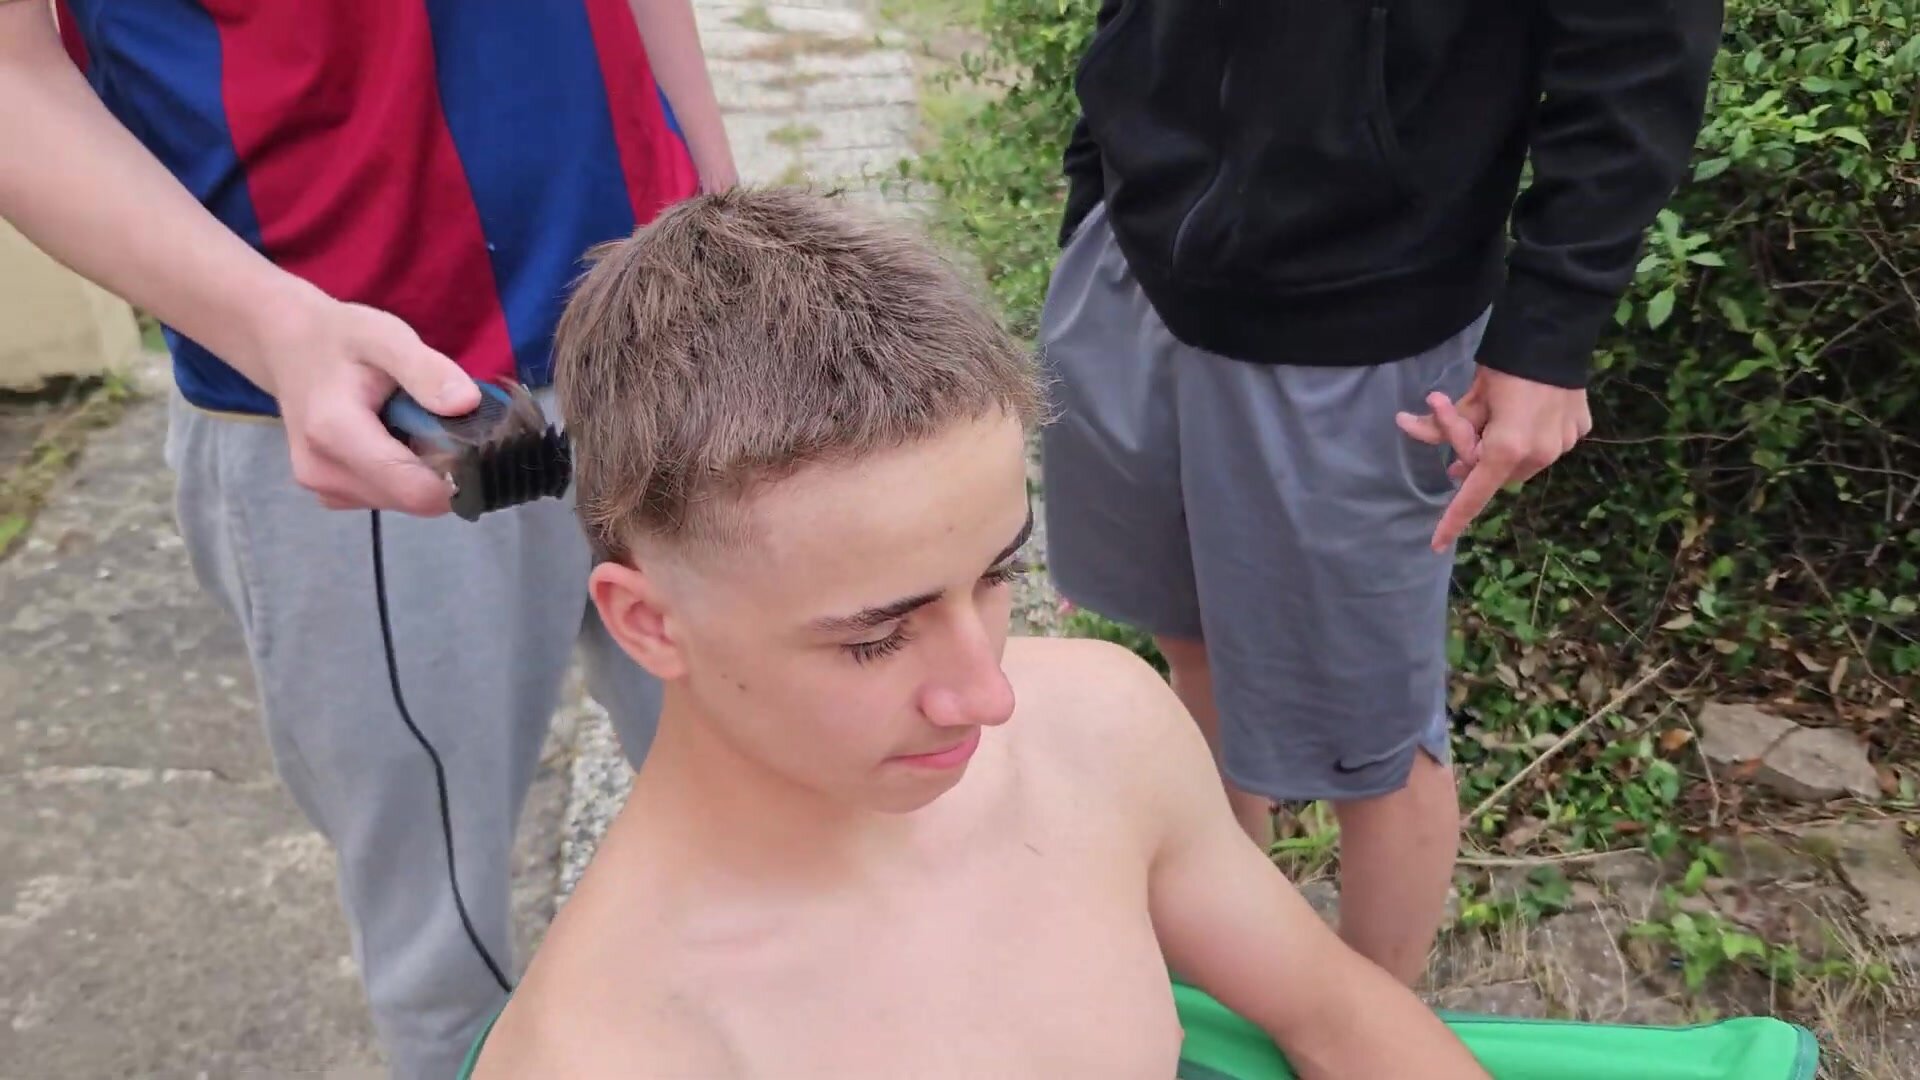 French teen gets shirtless backyard haircut